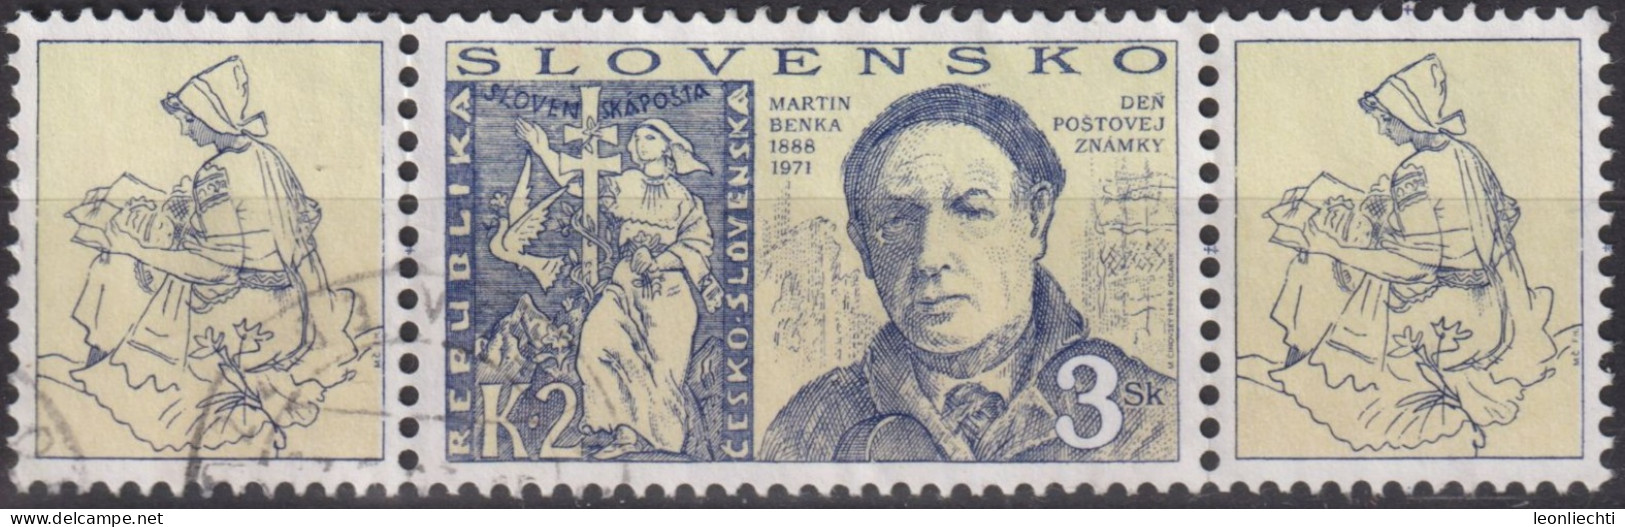 1996 Slowakische Republik ° Mi:SK 270Zf, Sn:SK 262, Yt:SK 228, Stamp Day, Tag Der Briefmarke - Used Stamps